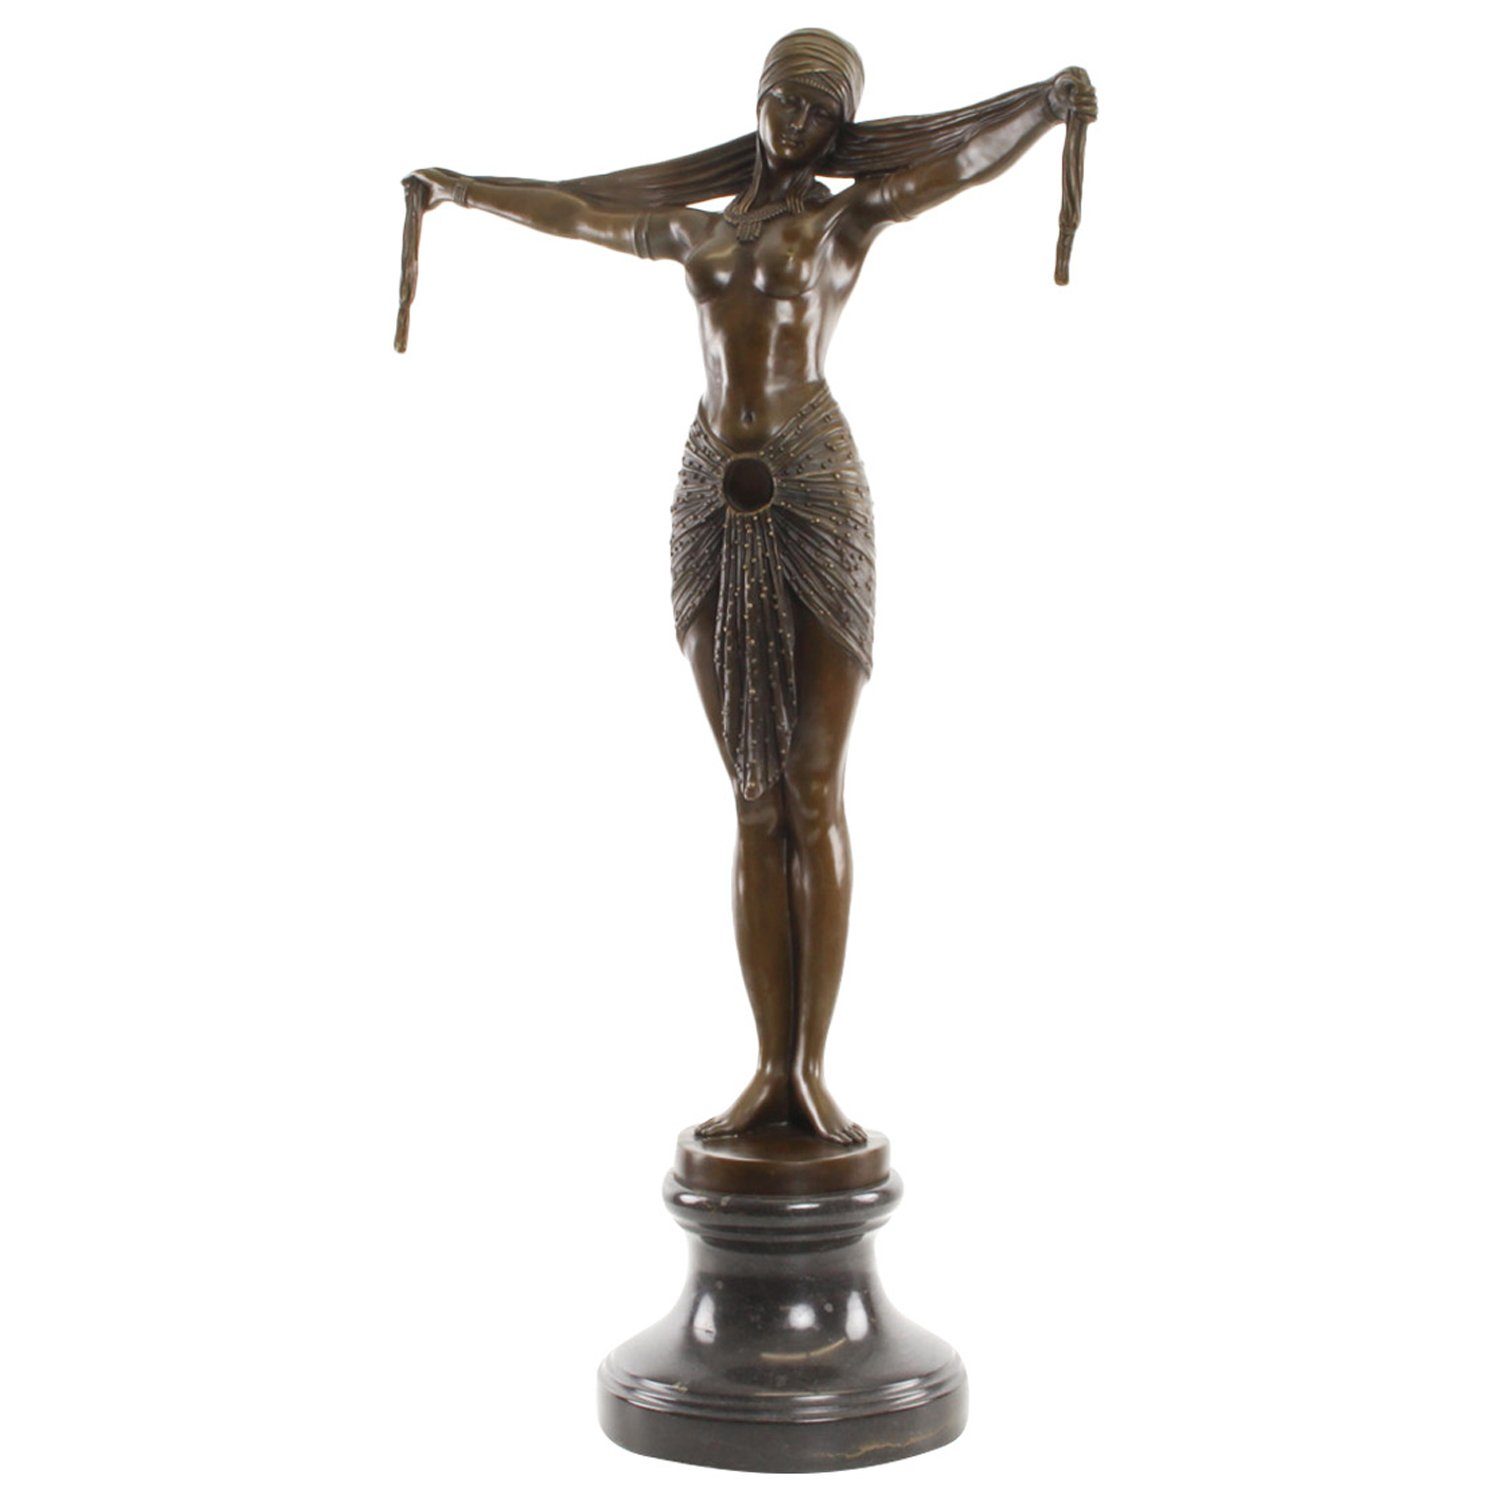 Aubaho Skulptur Bronzeskulptur Schaltänzerin Artdeco-Antik-Stil Figur Moderne Skulptur